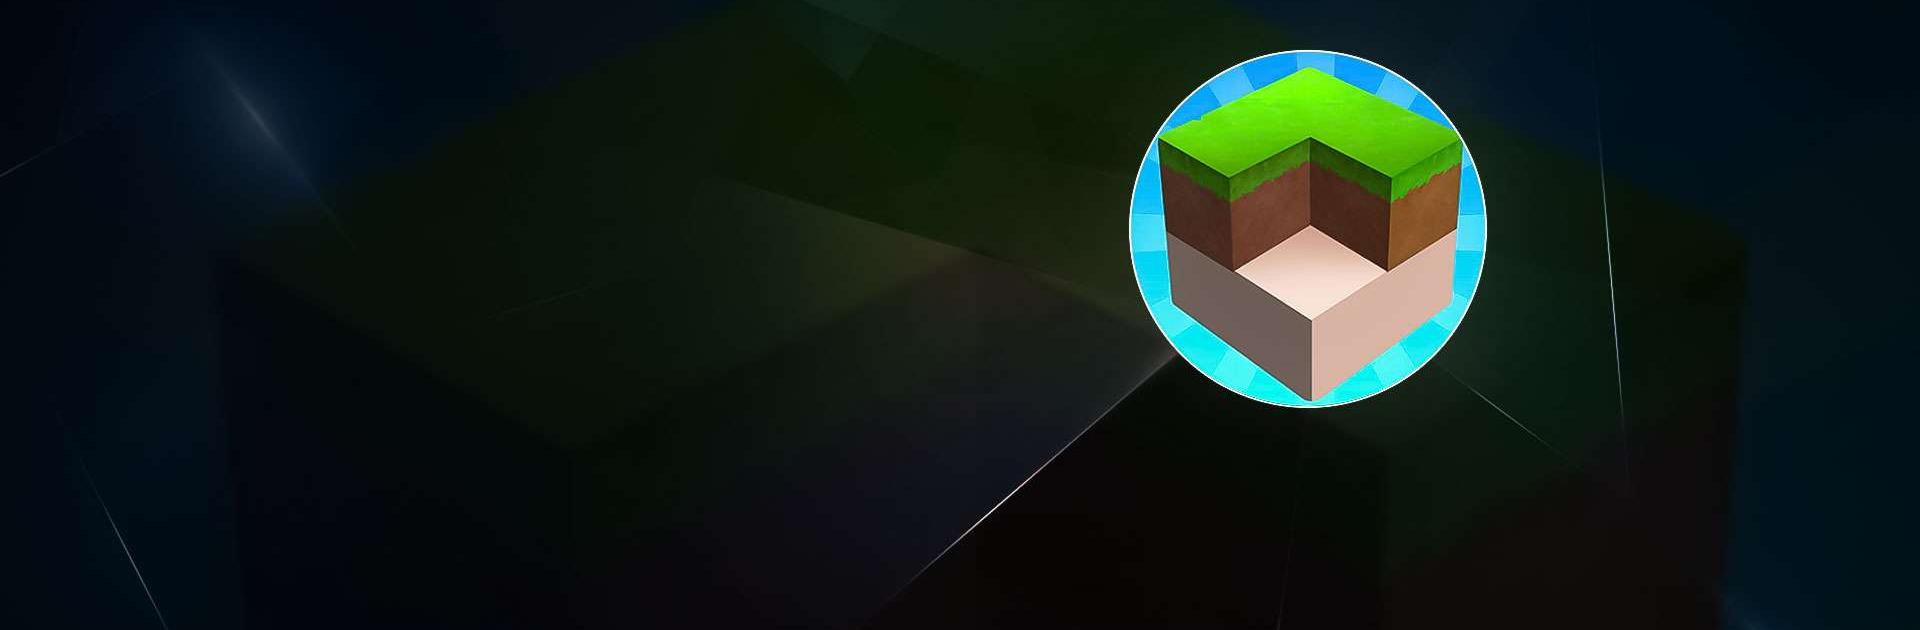 MiniCraft: Blocky Craft 2023 - Apps on Google Play